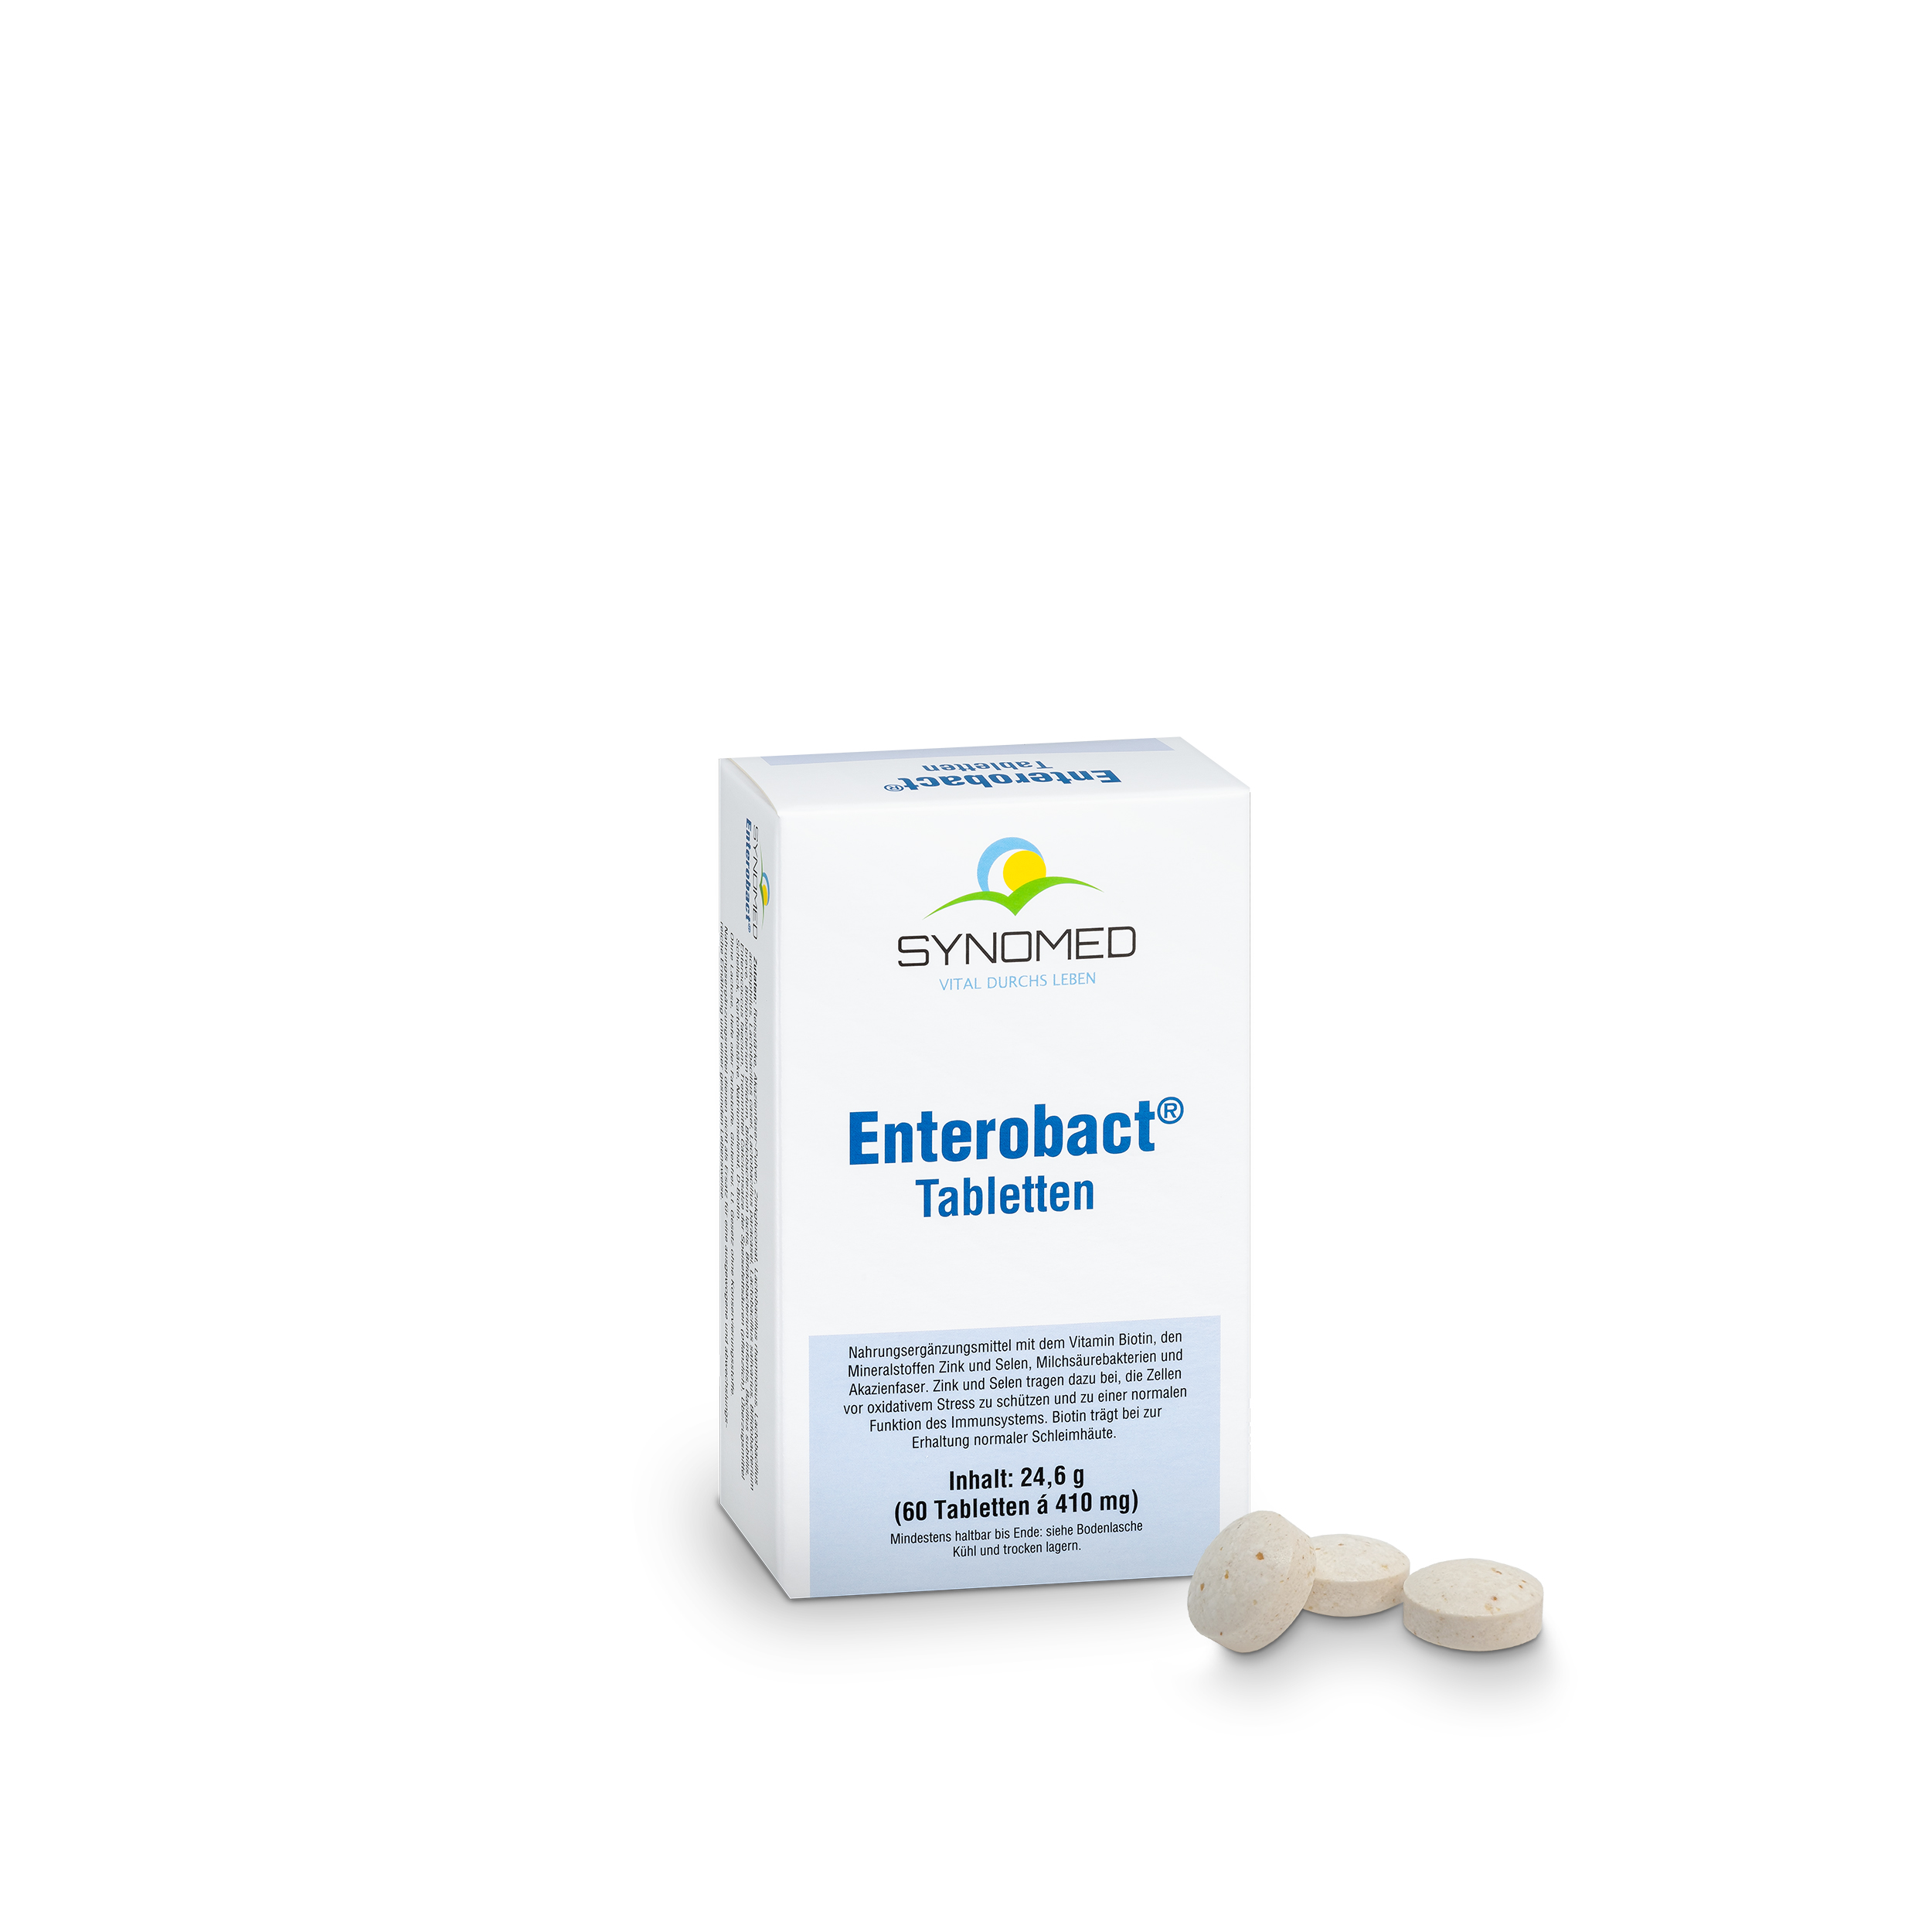 Enterobact ® Tabletten